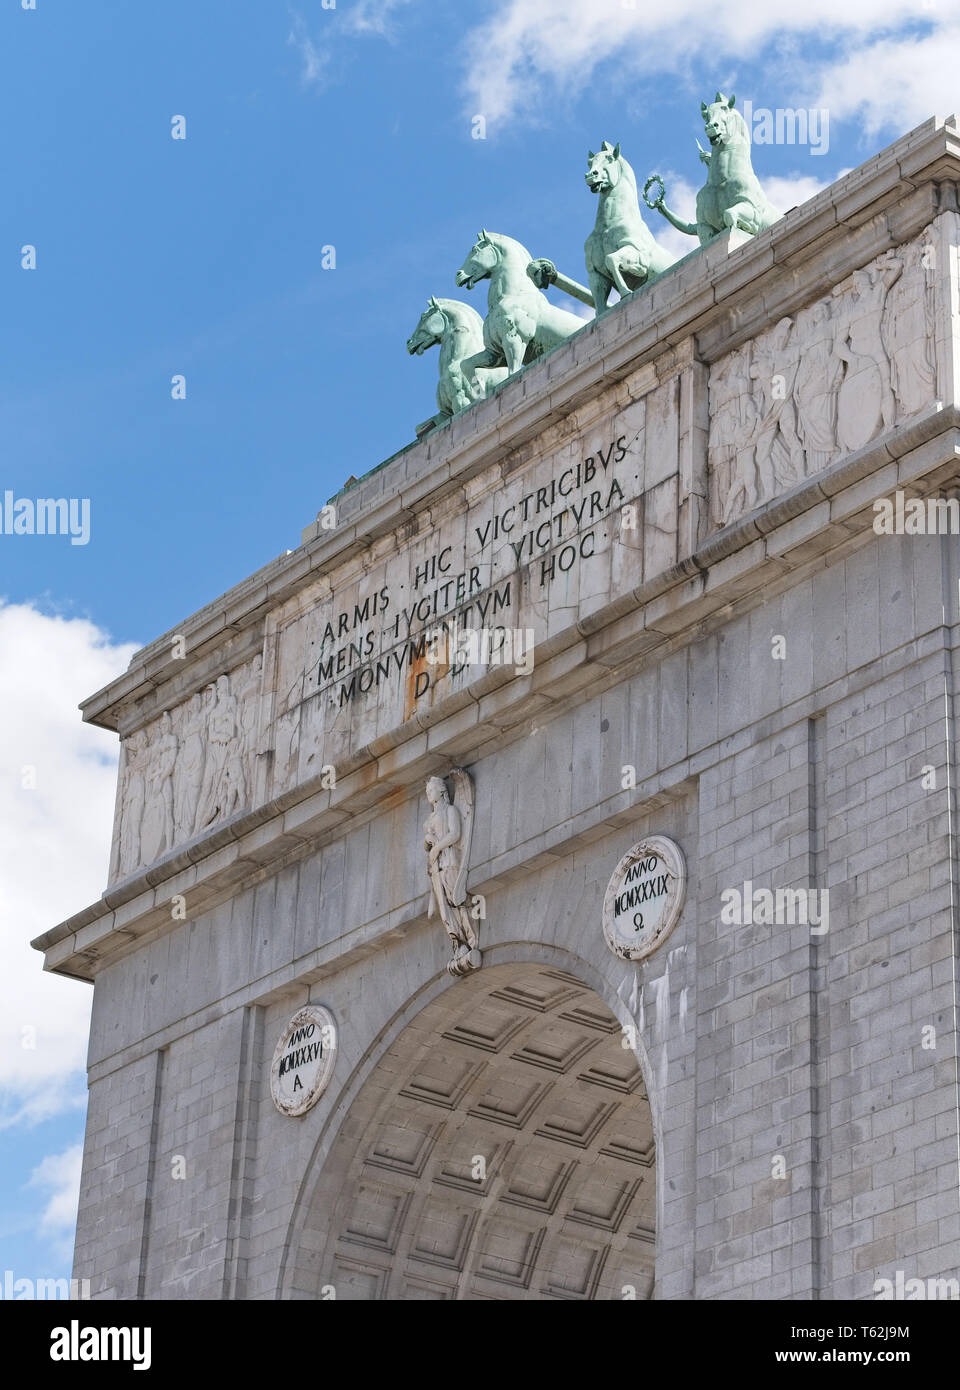 Arco de la Victoria (Victory Arch) is a triumphal arch built in the Moncloa, Madrid, Spain. Stock Photo